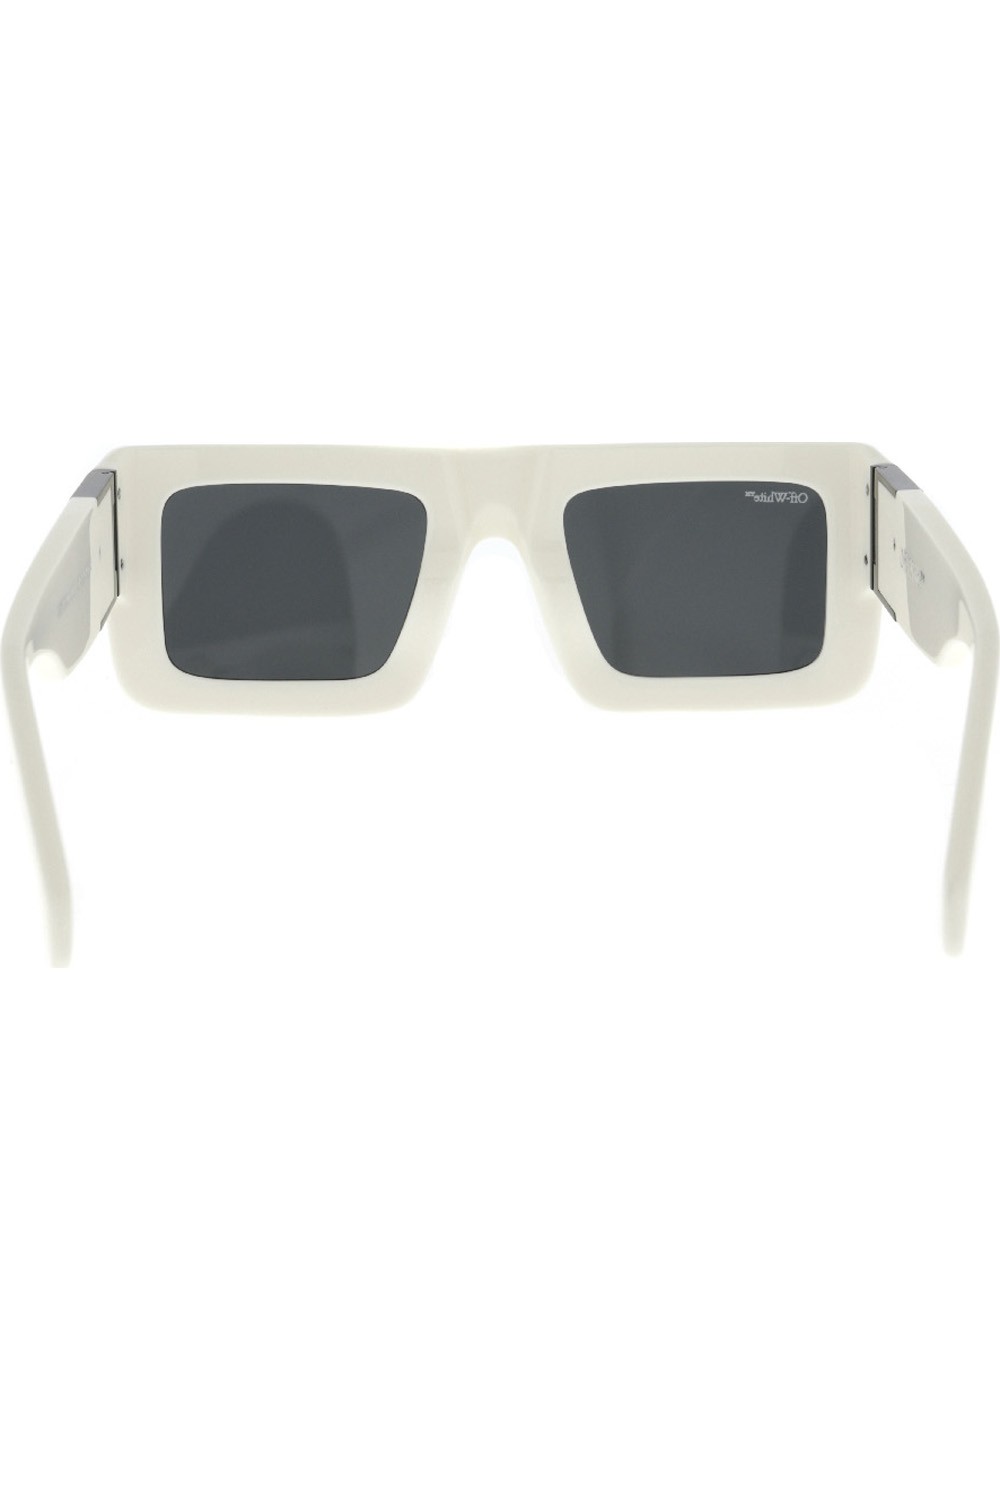 Off-White Leonardo Oeri049 Square Sunglasses